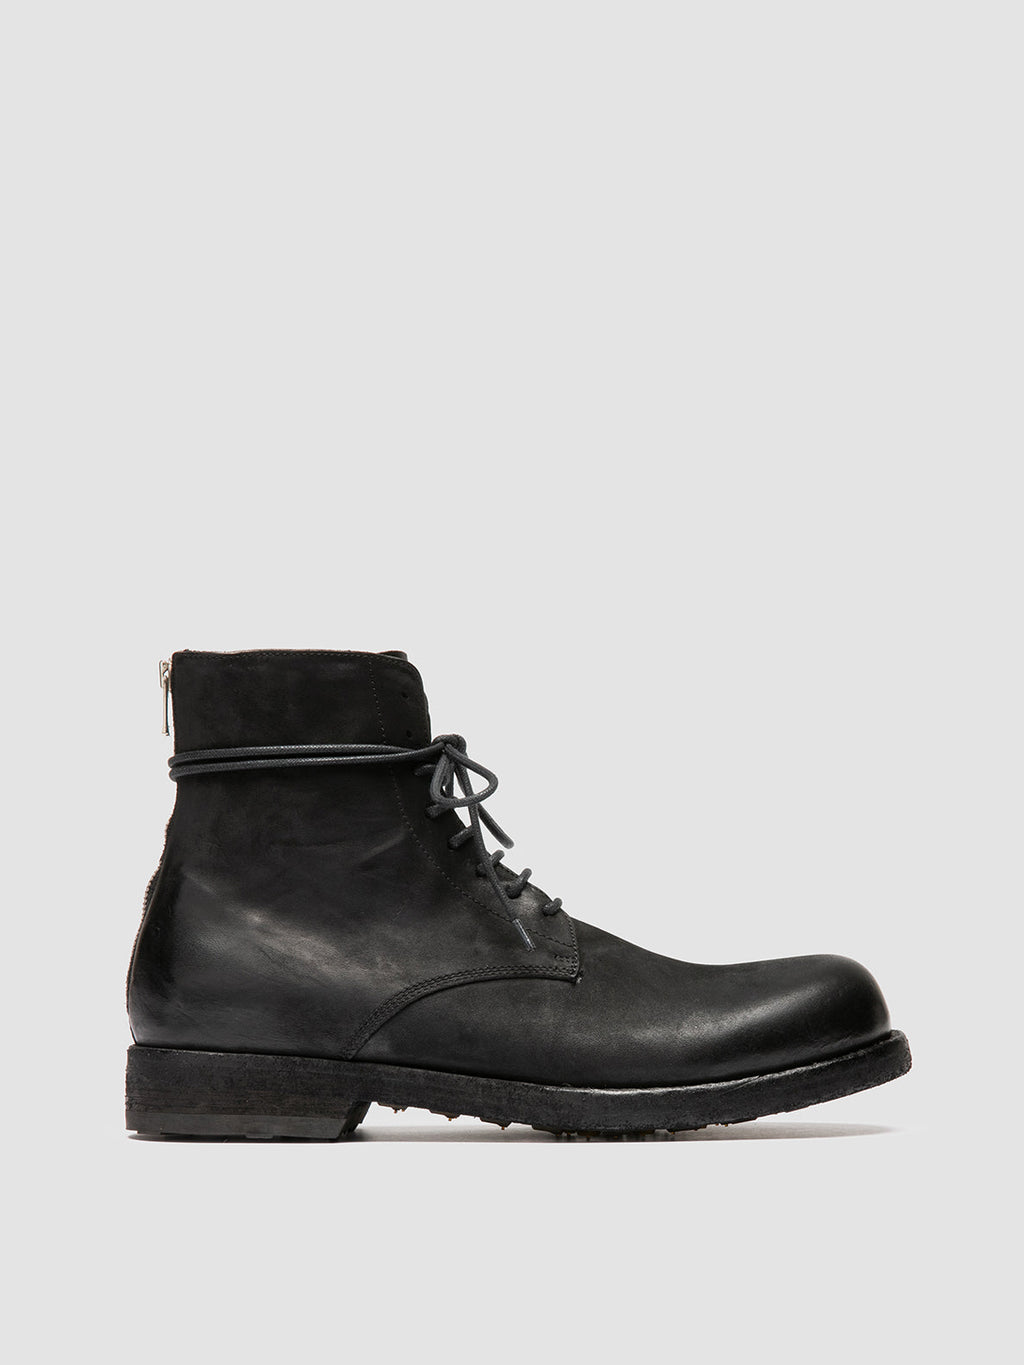 BULLA DD 102 - Black Leather Lace-up Boots Men Officine Creative - 1